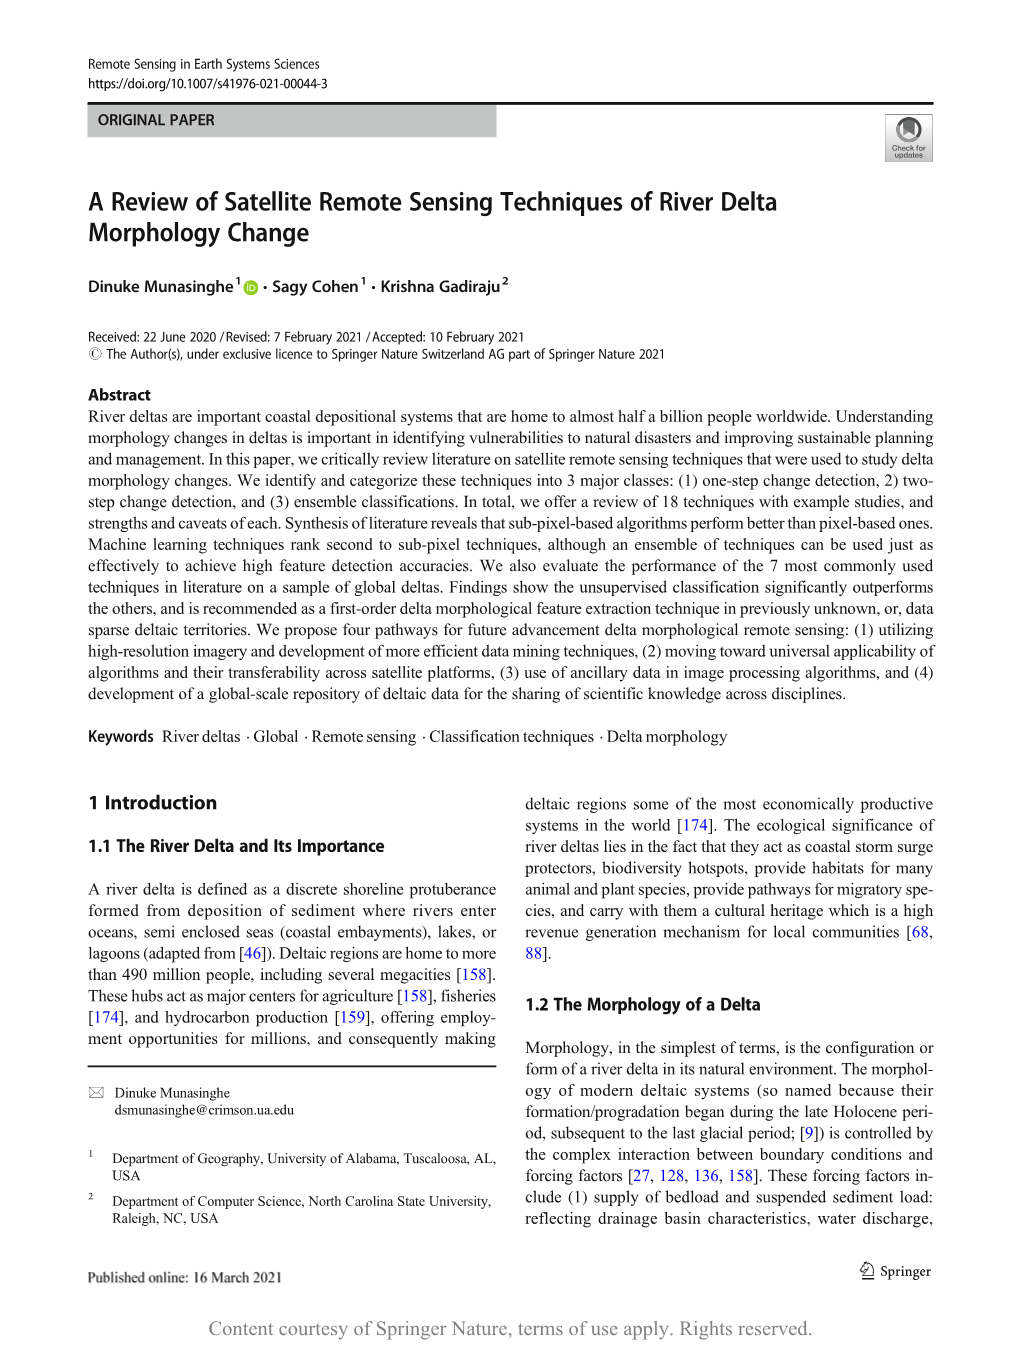 A Review of Satellite Remote Sensing Techniques of River Delta Morphology Change